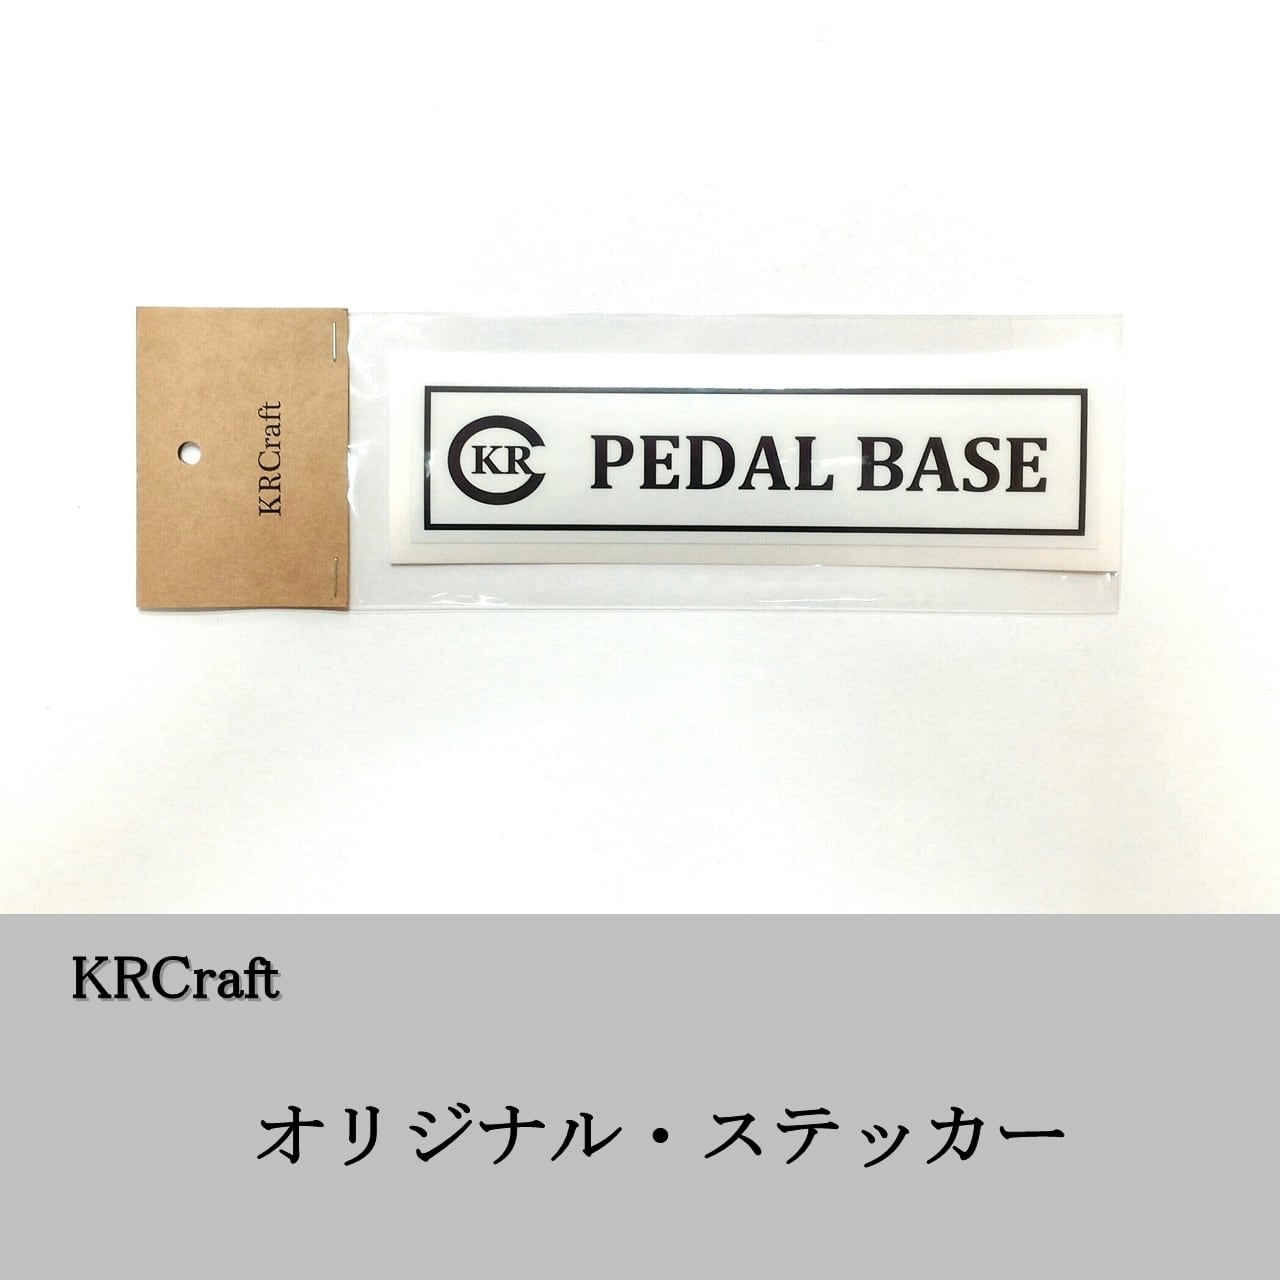 KRCraft International